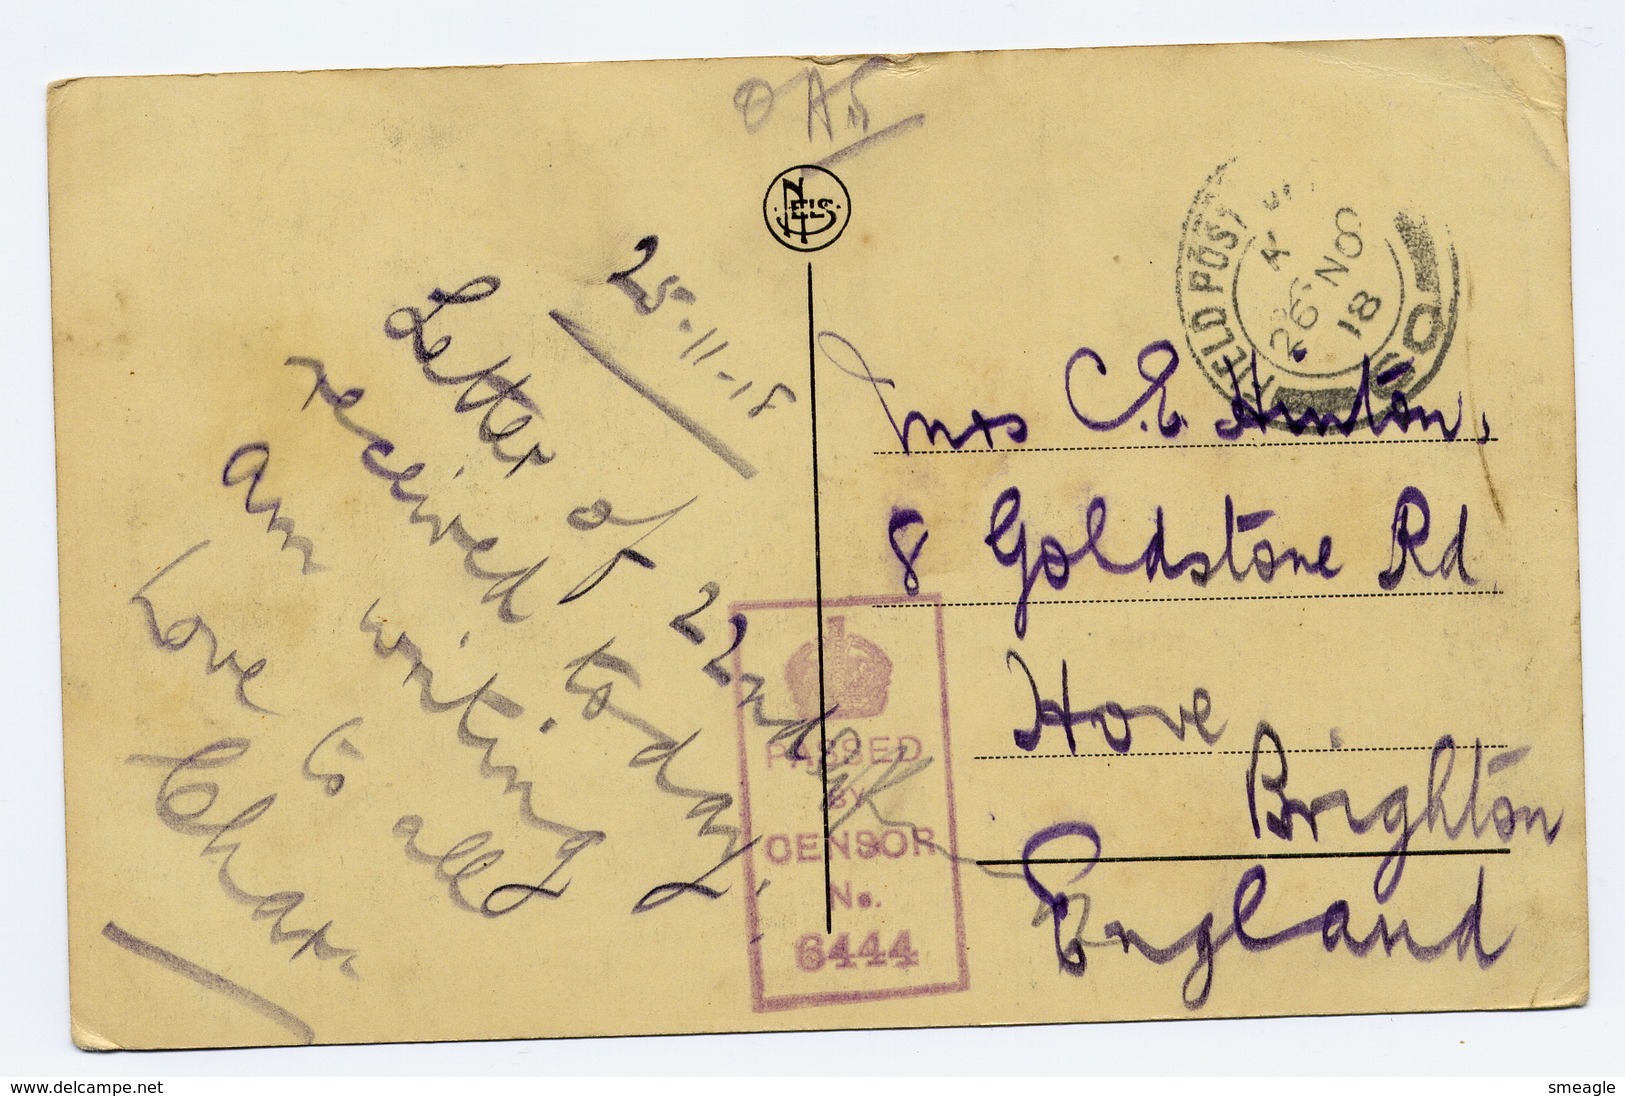 Picture Postcard Tournai Belgium 1918 Censor 6444 Field Post Office S0 - Guerre 1914-18